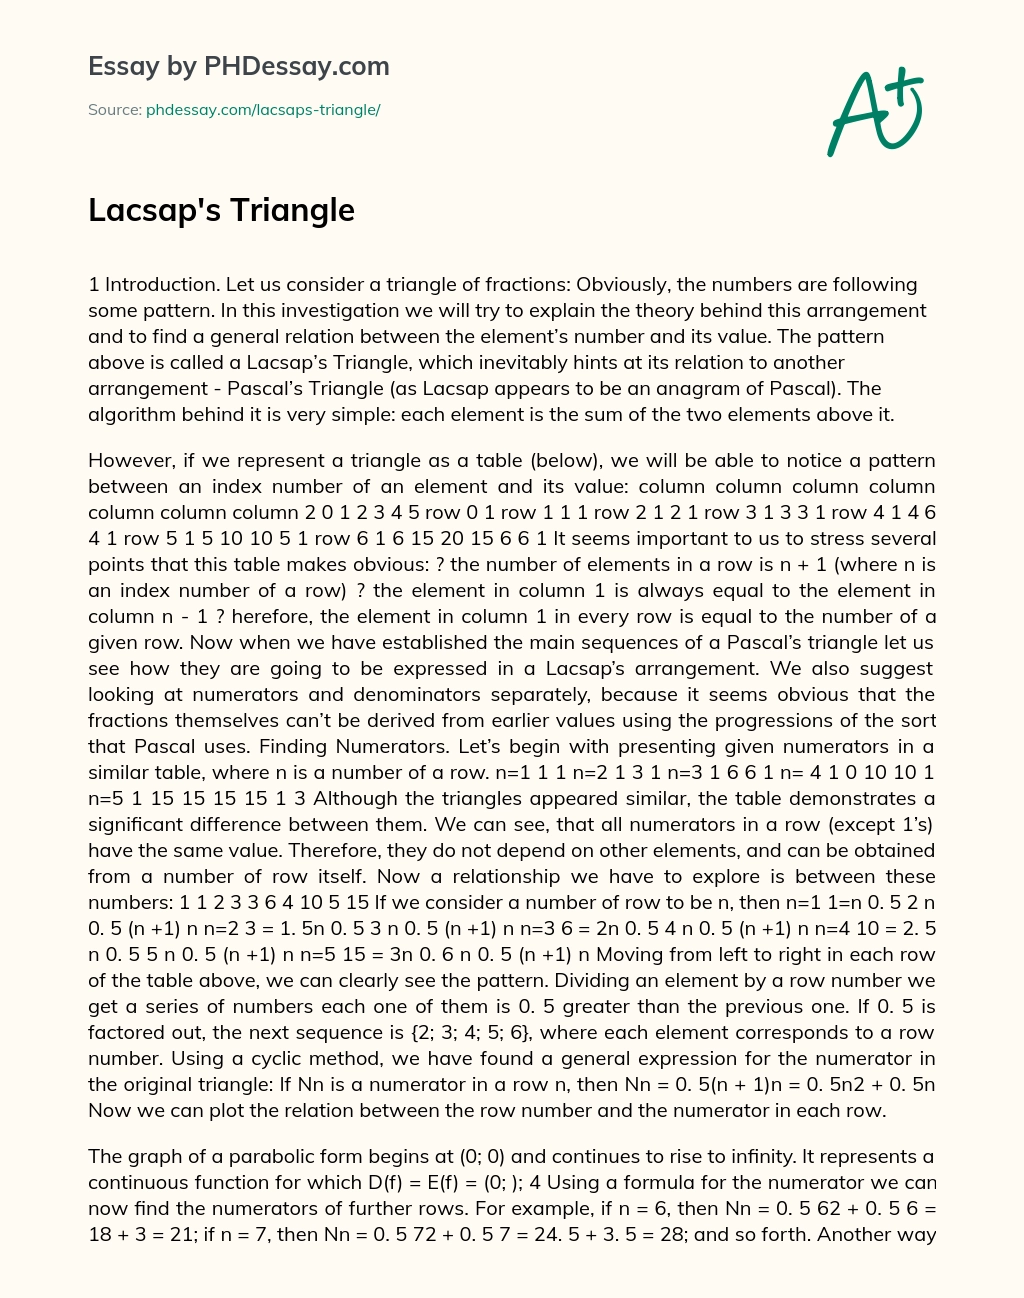 Lacsap’s Triangle essay